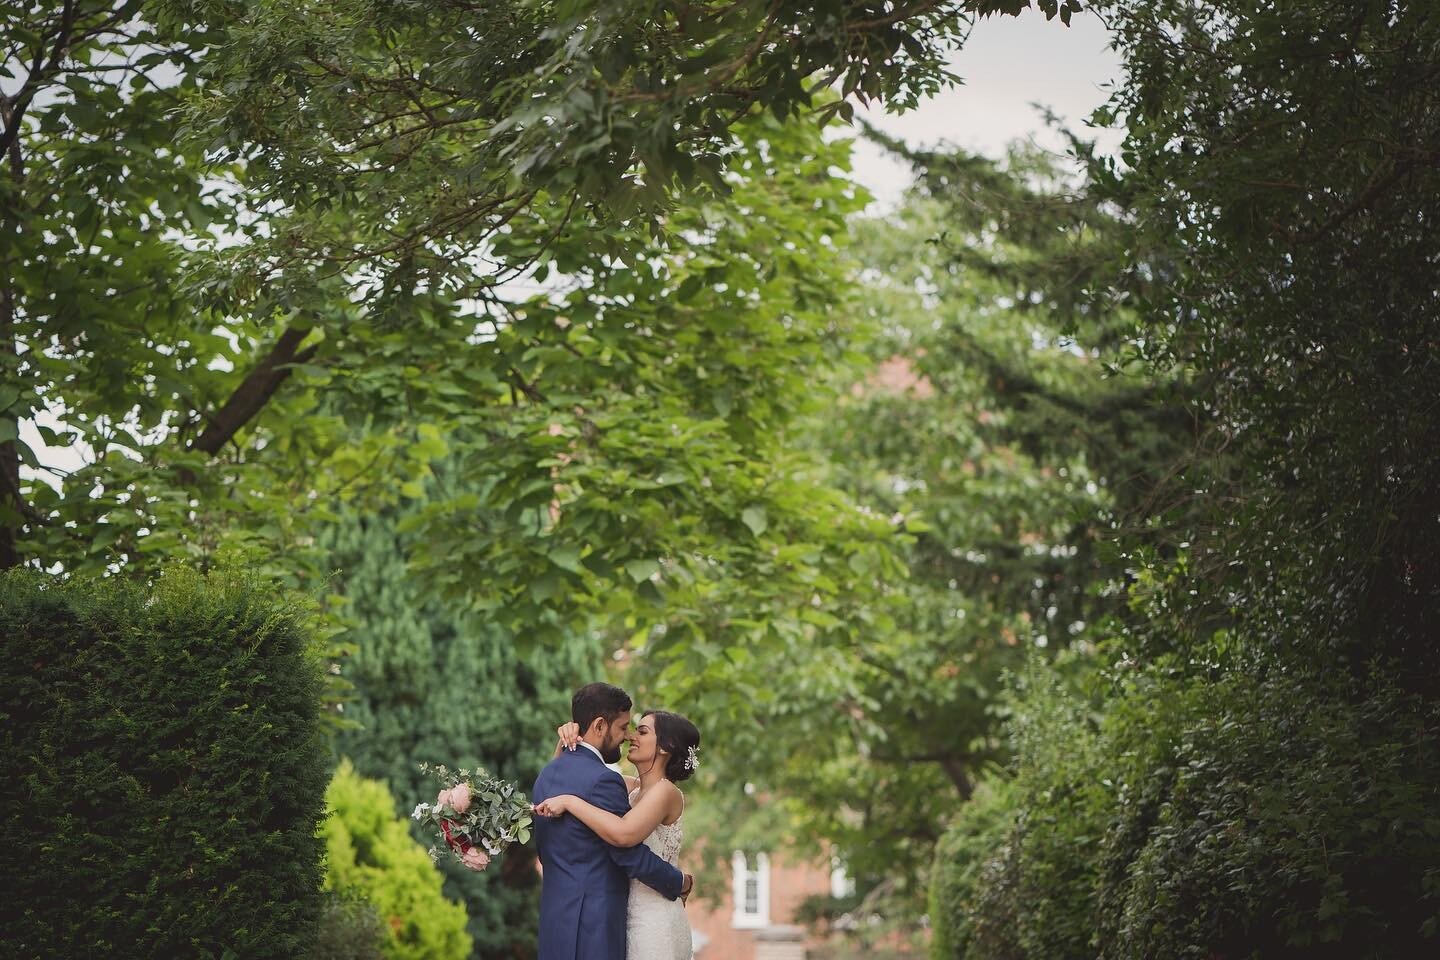 This lovely summer wedding at York House in Twickenham just went on the blog. 
#yorkhouseweddings #twickenhamwedding #nickrosephotography #civilweddingphotography #indianweddings #yorkhousetwickenham #ukbride #weddingdaymoments #yorkhousegardens